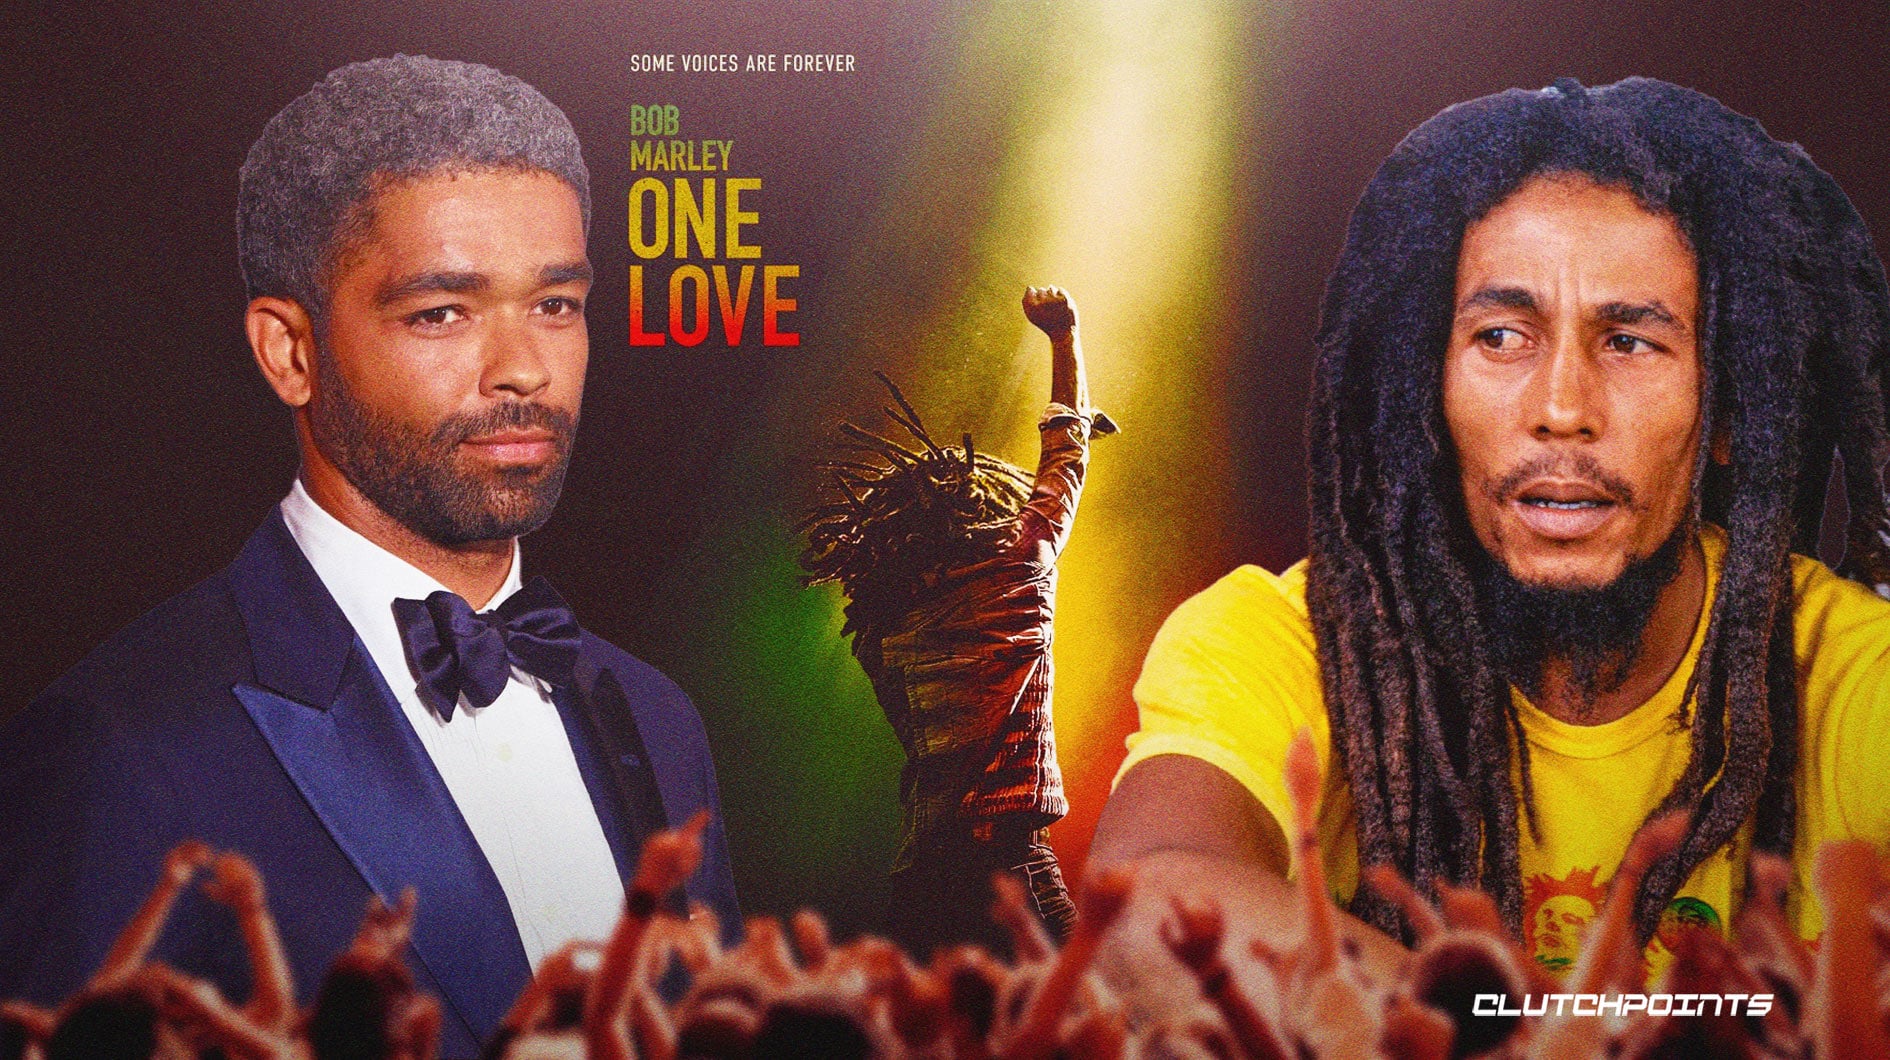 Bob Marley - One Love 